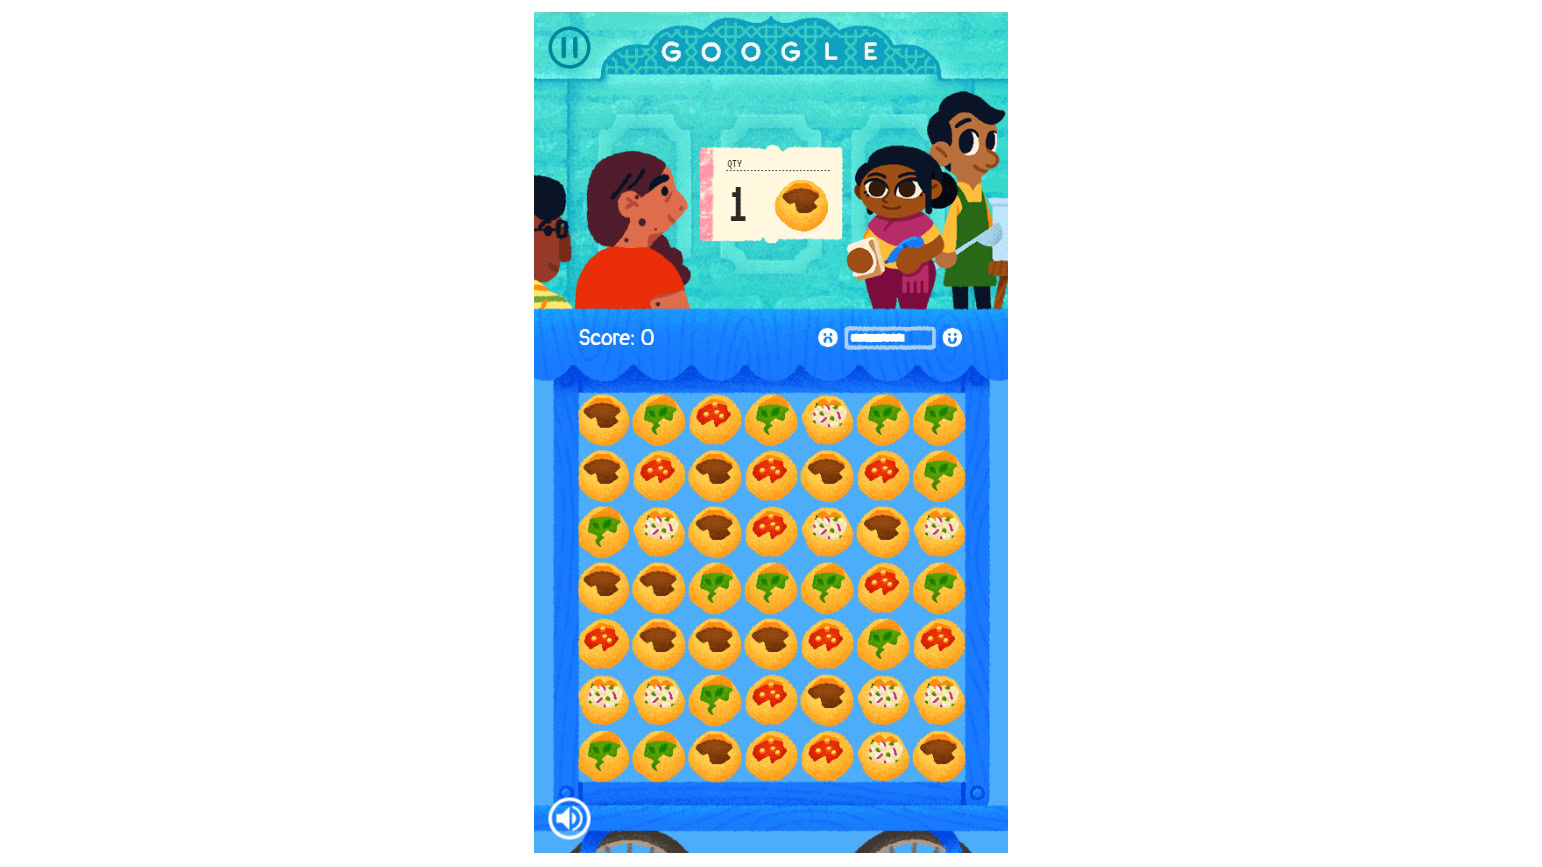 Pani Puri Google Doodle game